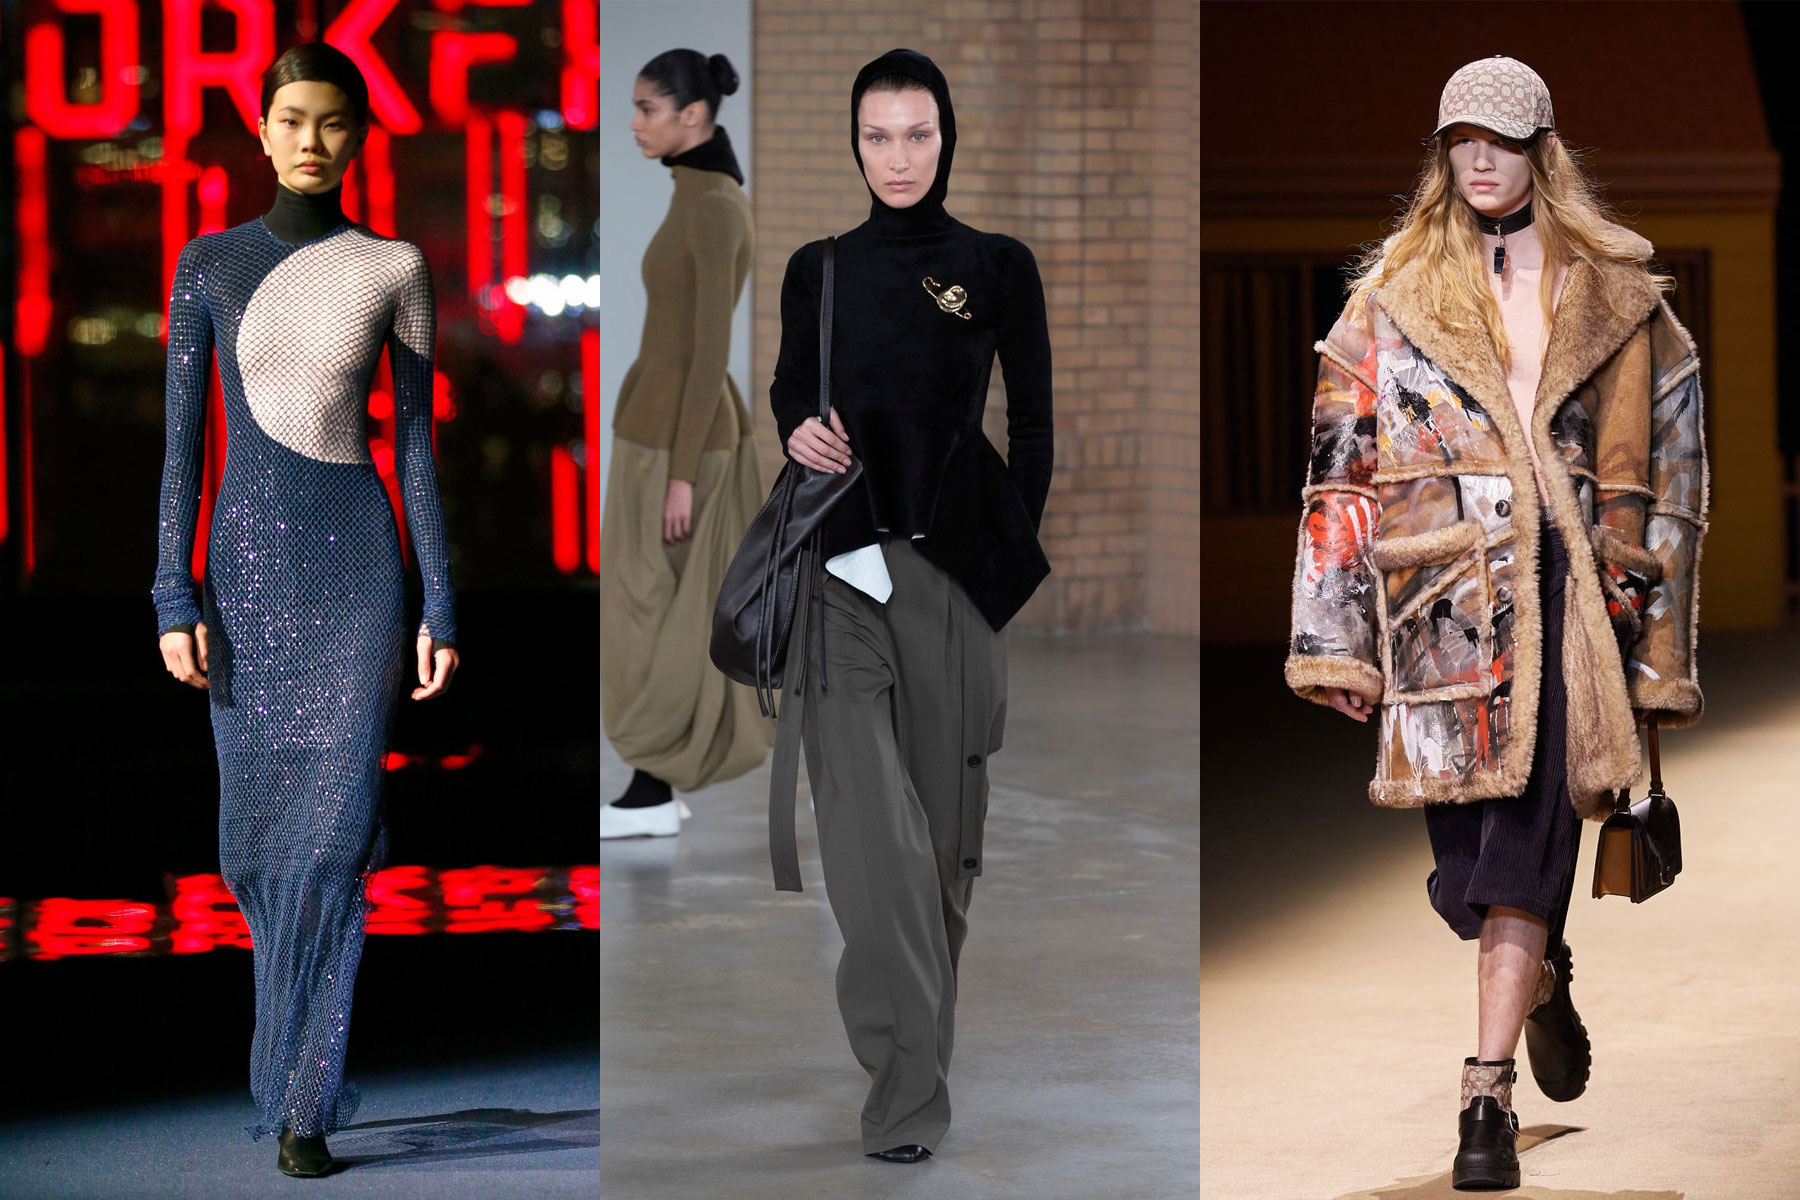 New York Fashion Week Fall 2022 Trends